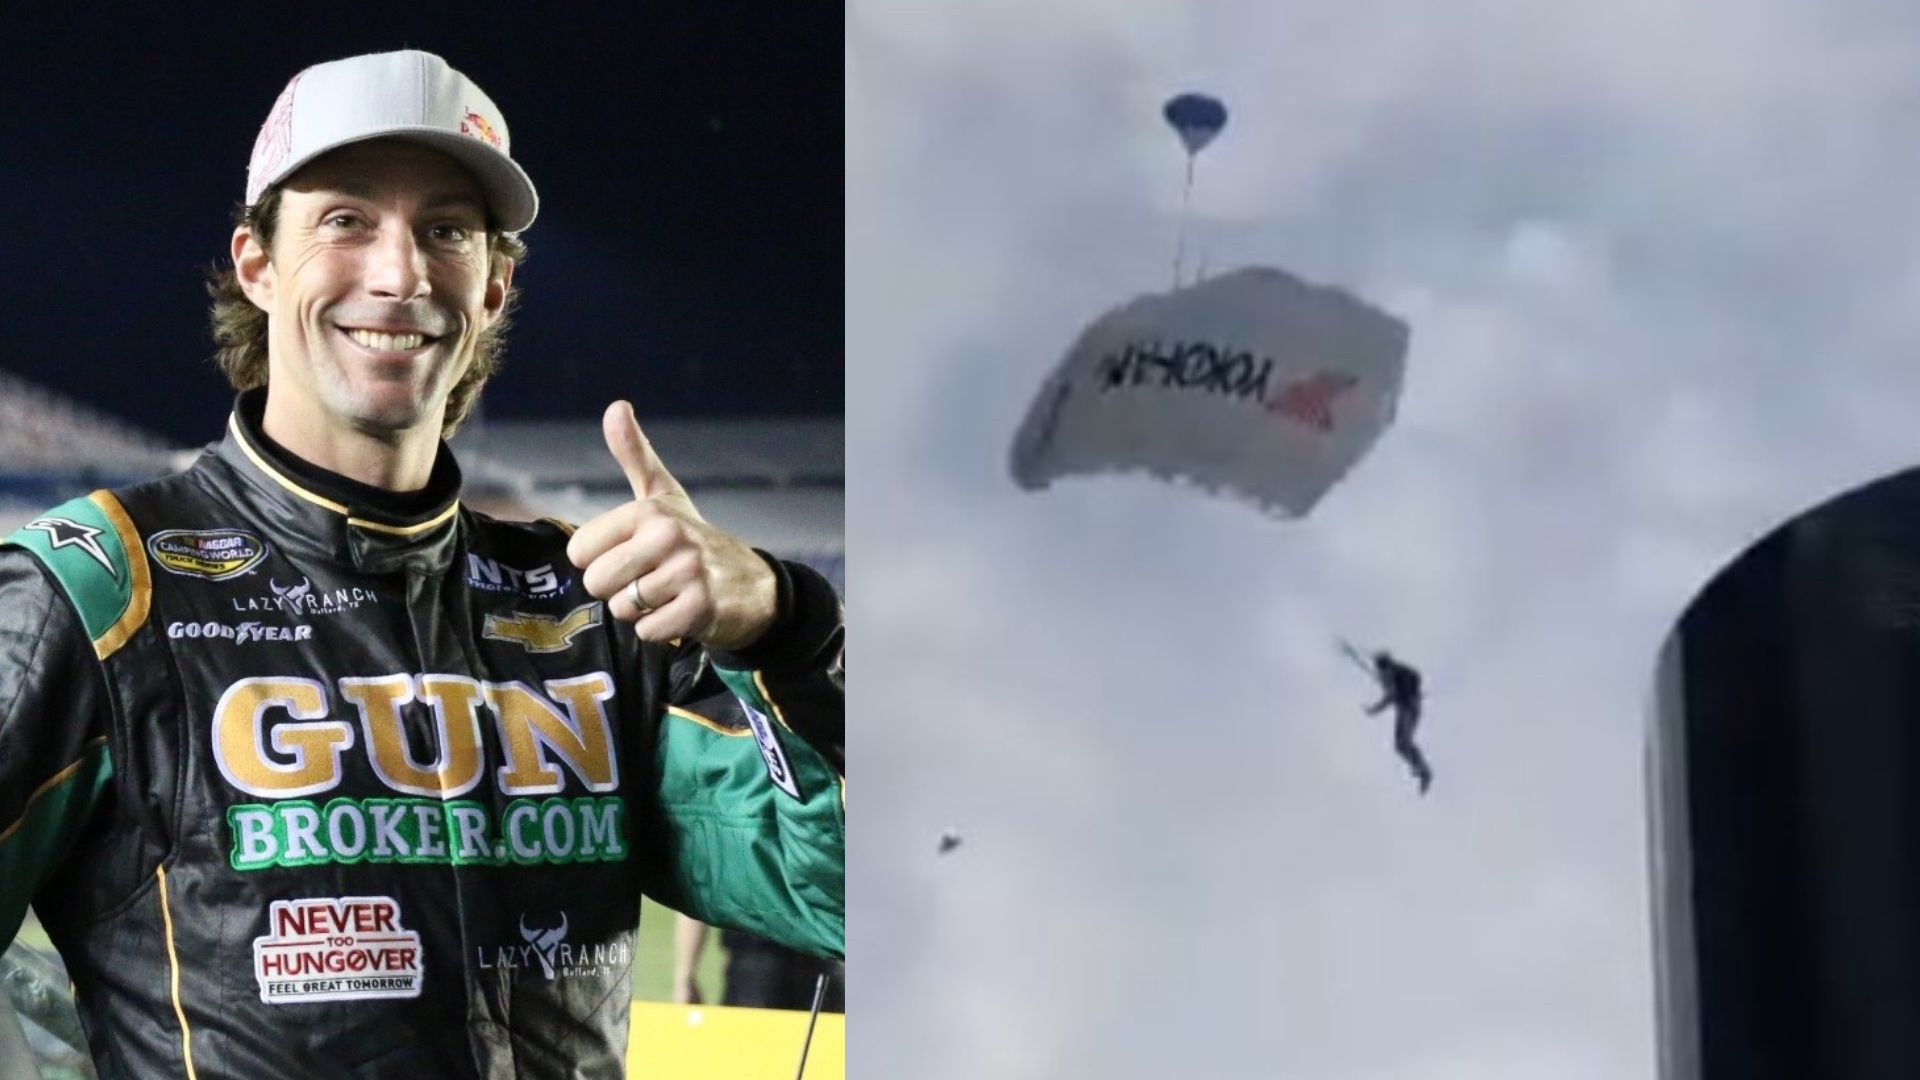 Motorsports Legend Travis Pastrana Hospitalized After Stunt Goes Wrong